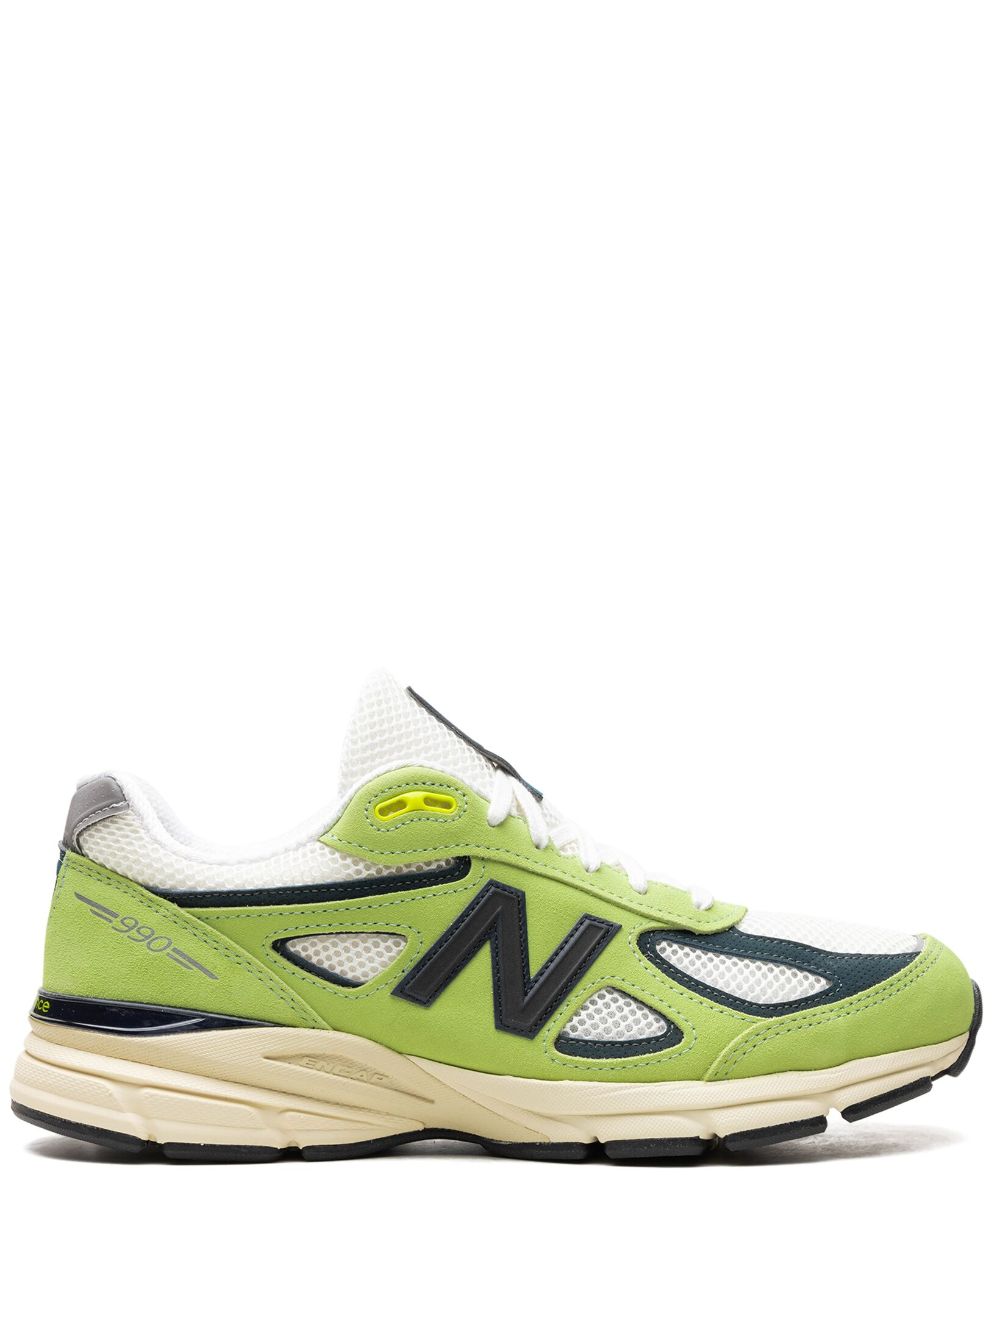 New Balance x Teddy Santis 990V4 sneakers Green